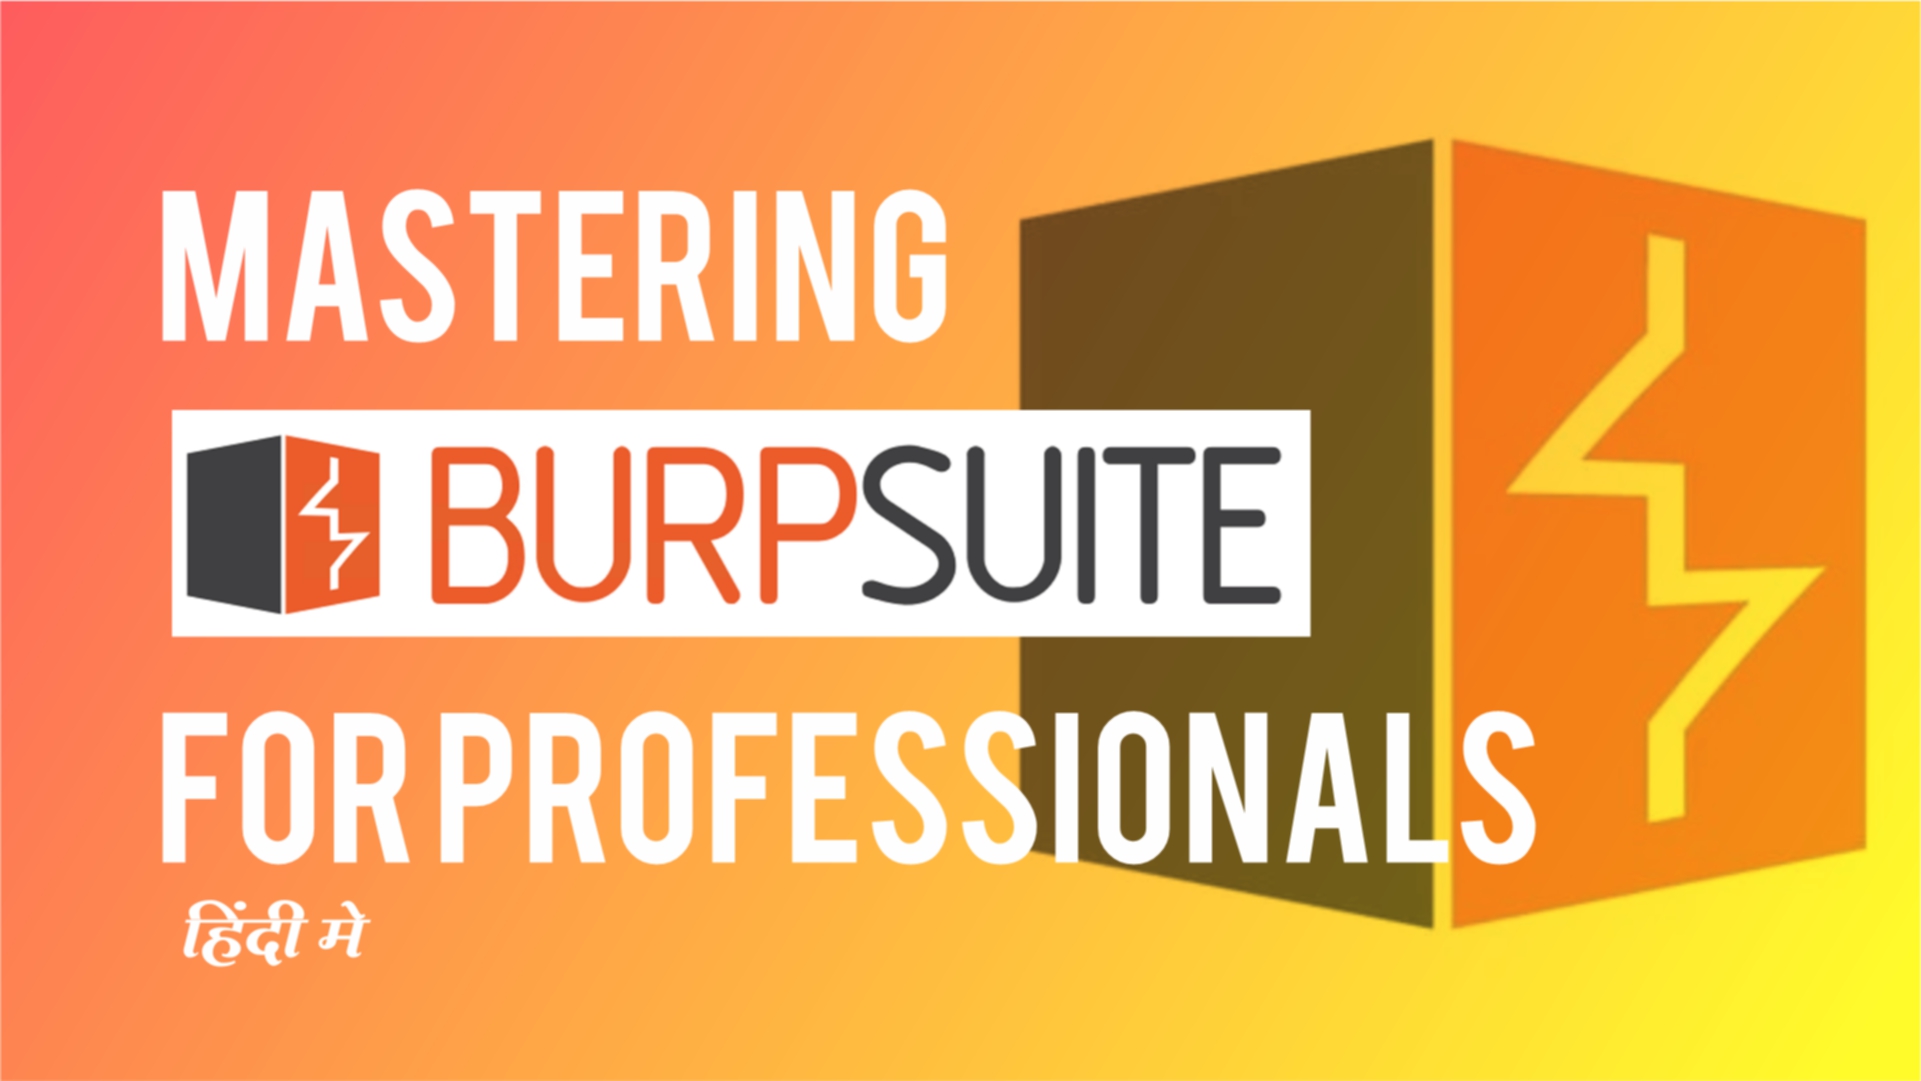 Mastering Burpsuite for professionals